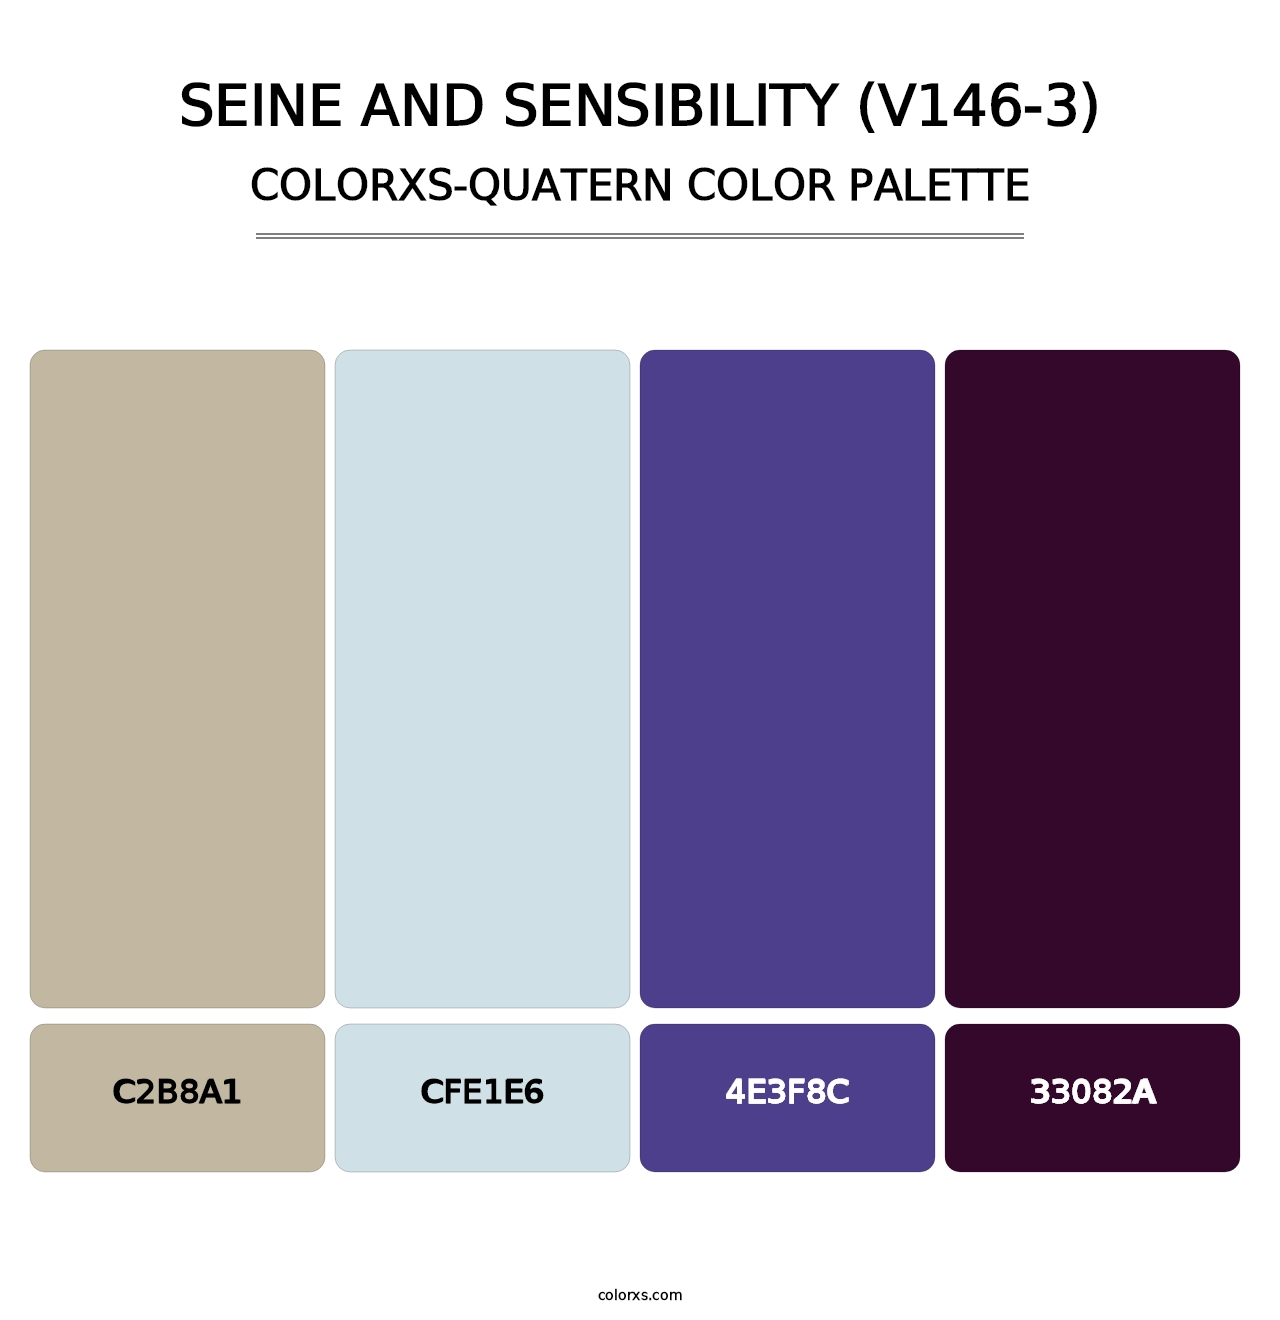 Seine and Sensibility (V146-3) - Colorxs Quatern Palette